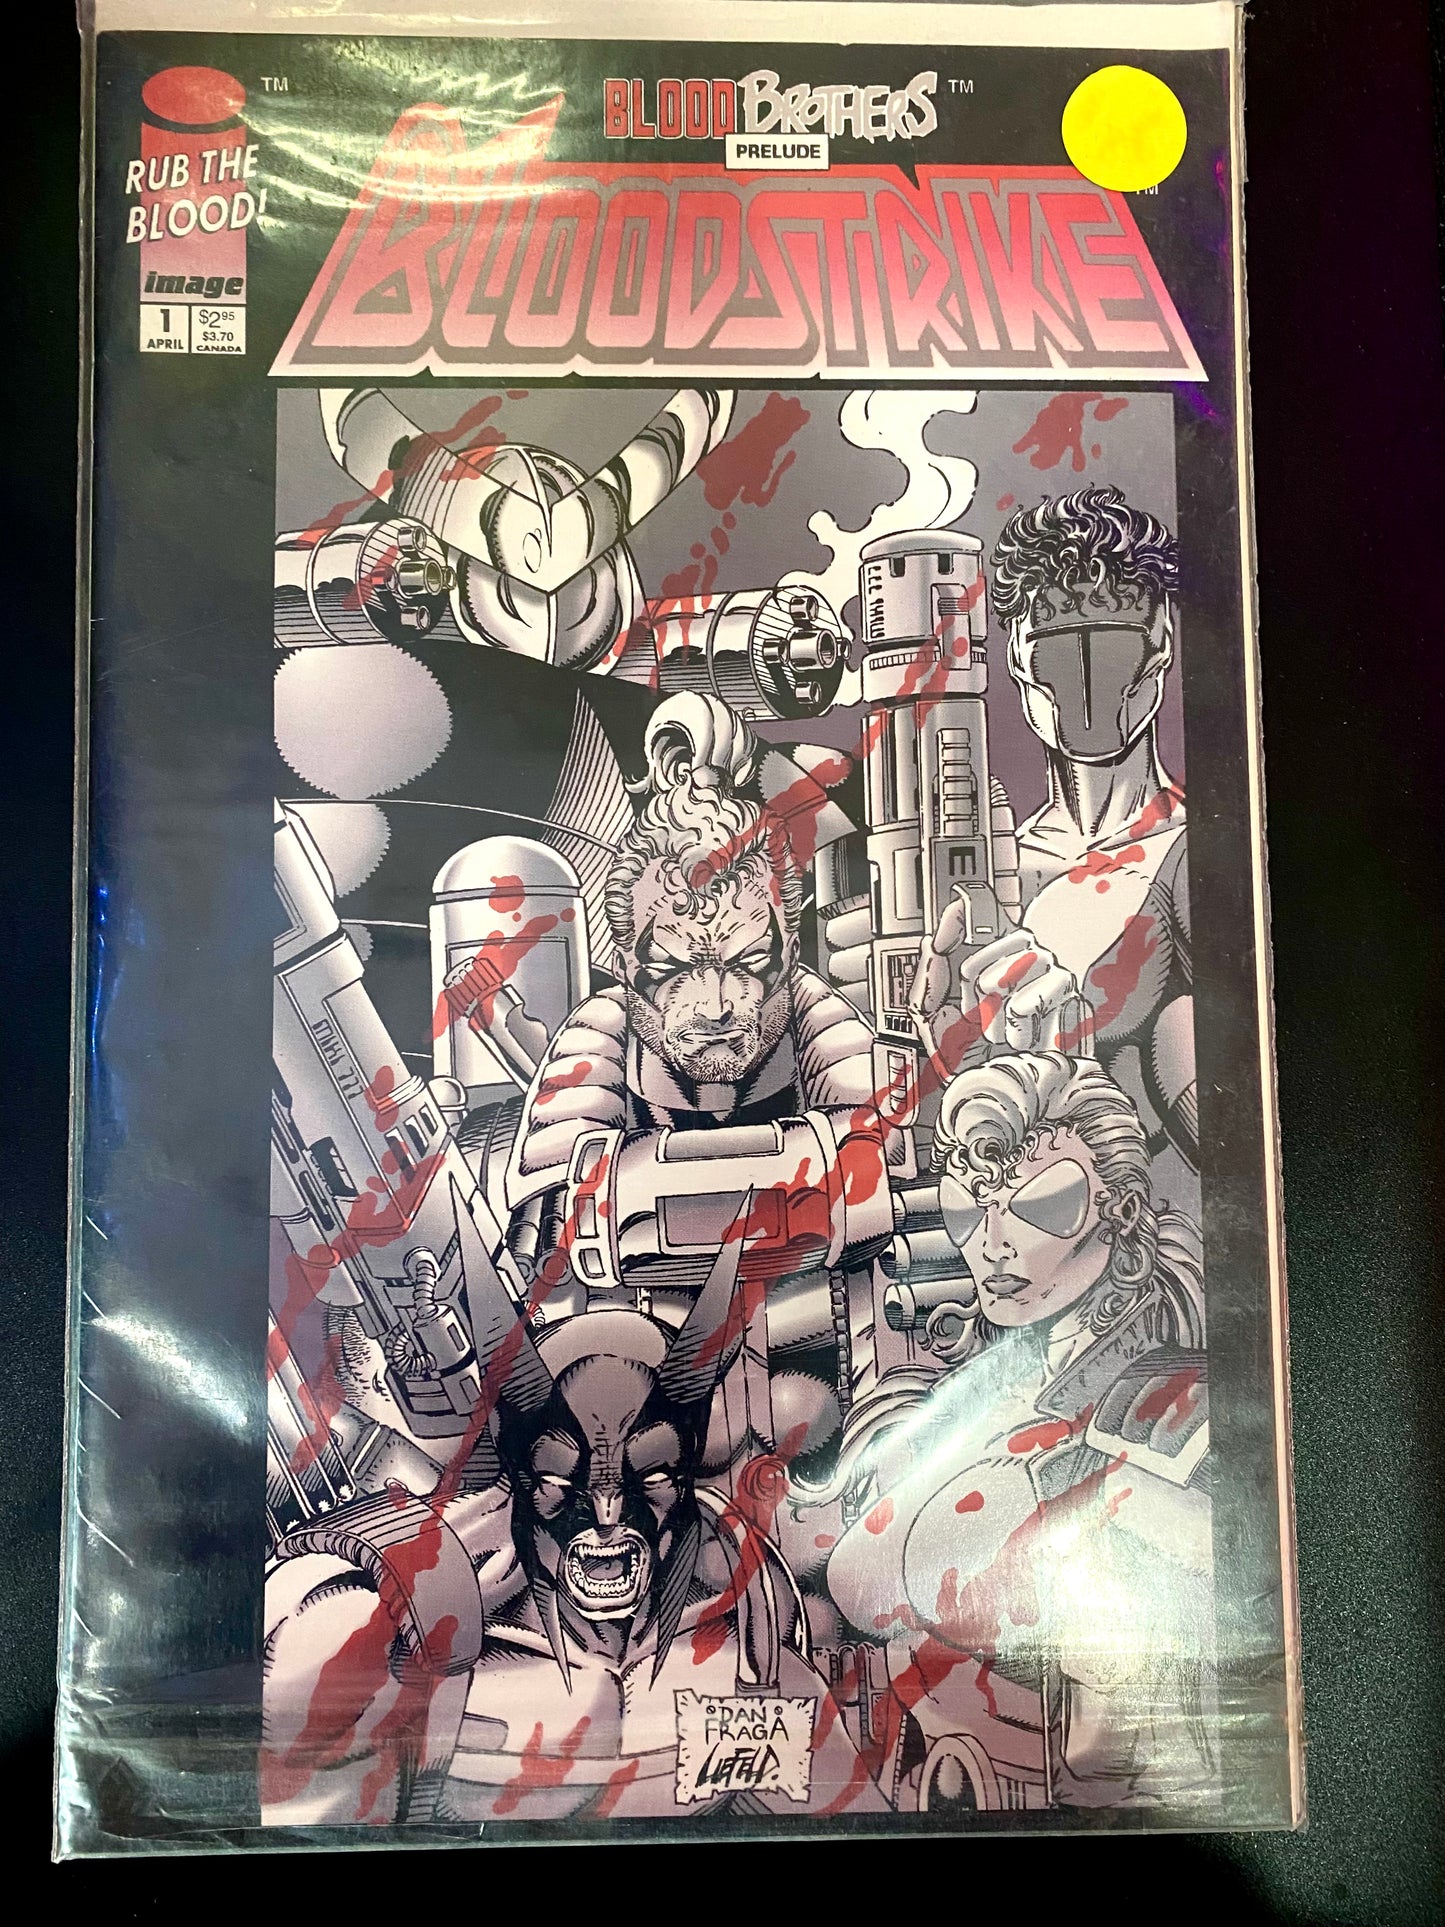 Image Comics: Bloodstrike Blood Brothers Prelude April No.1